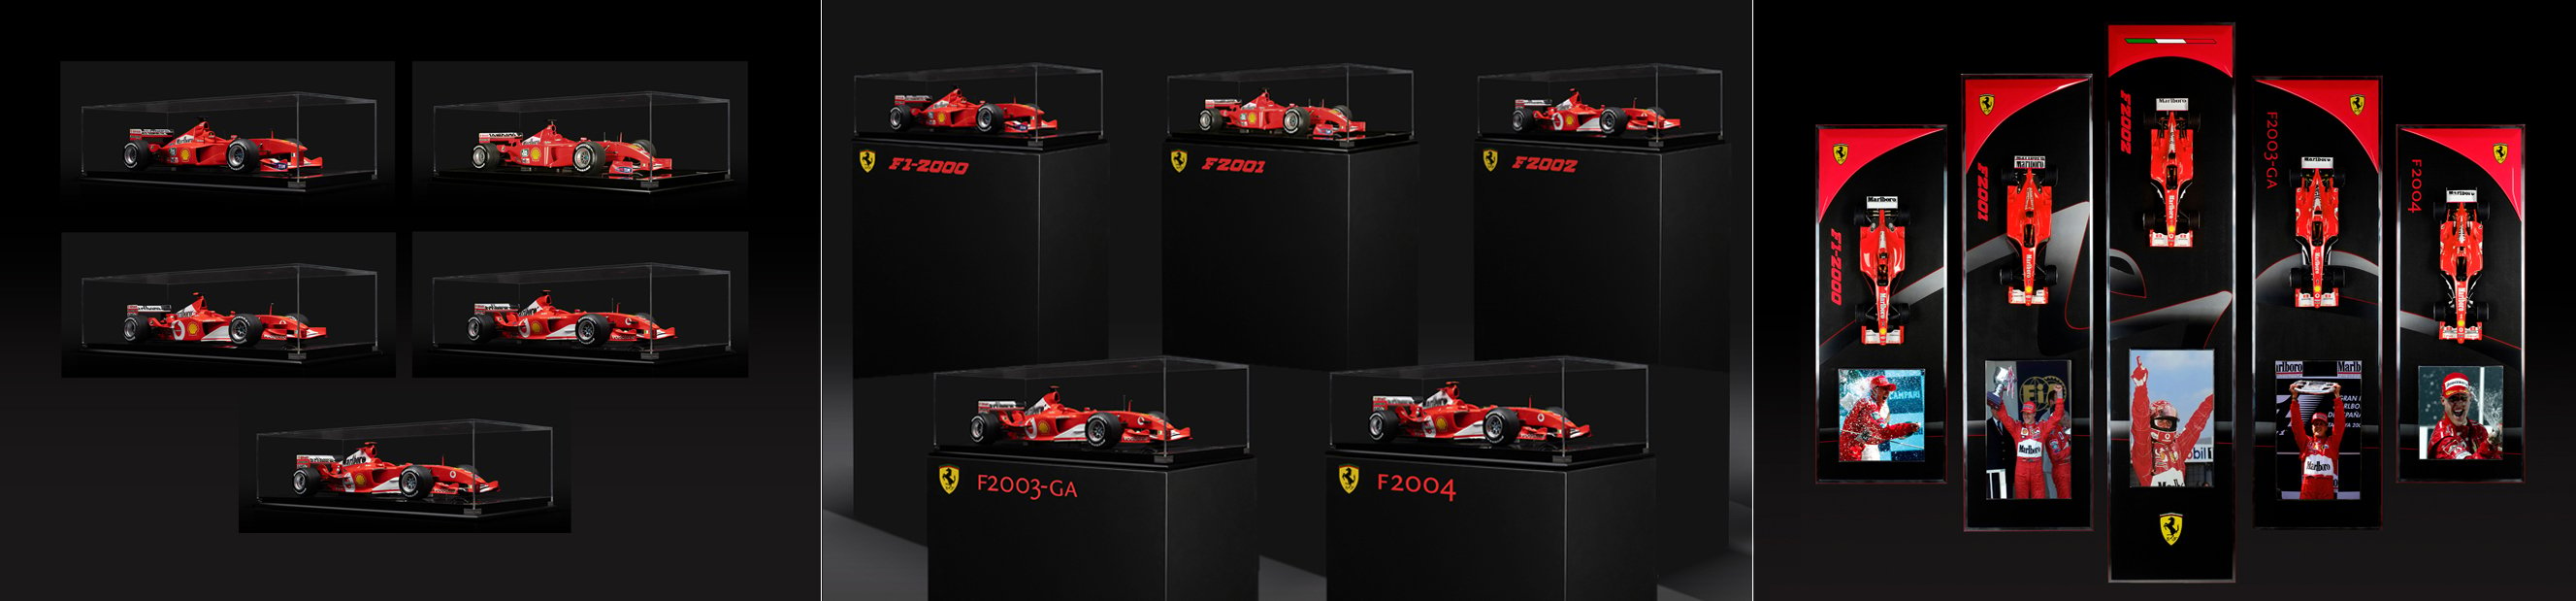 Three Ways to Display the Schumacher Collection